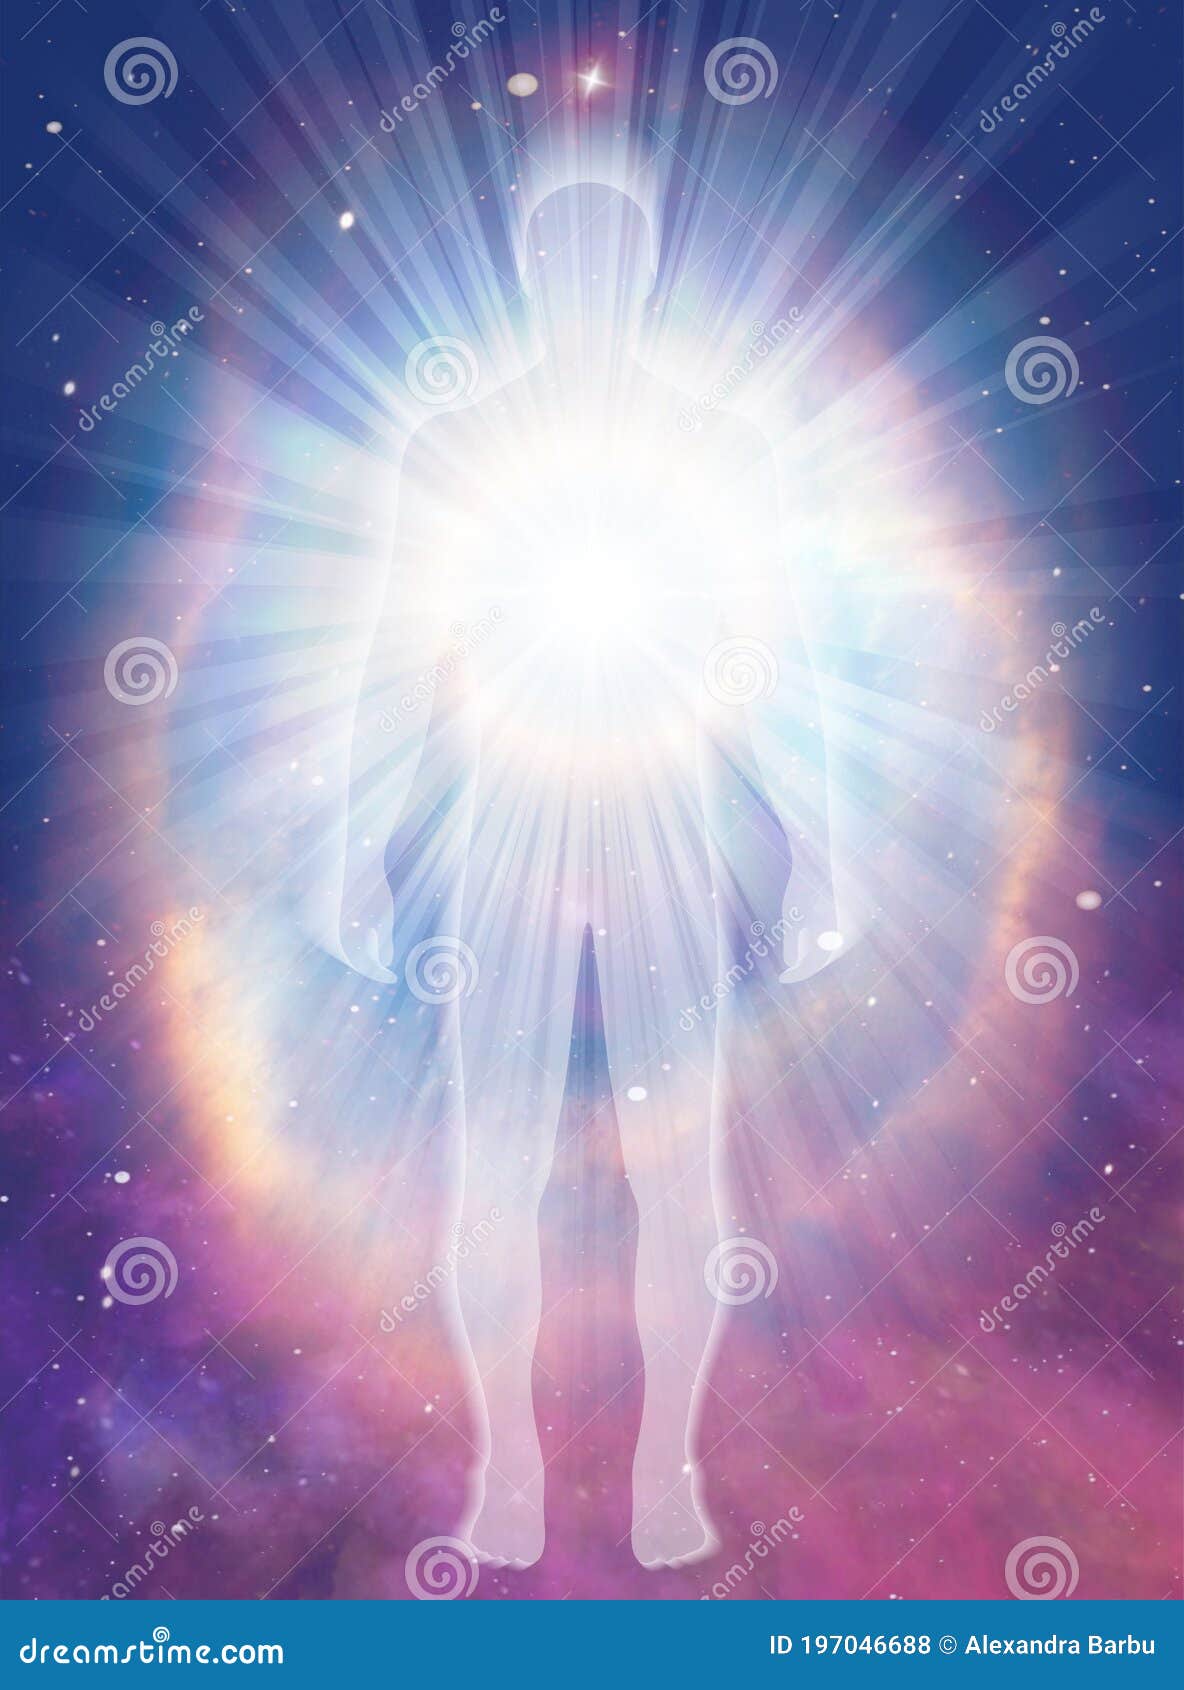 man universe, meditation, healing, human body energy beams